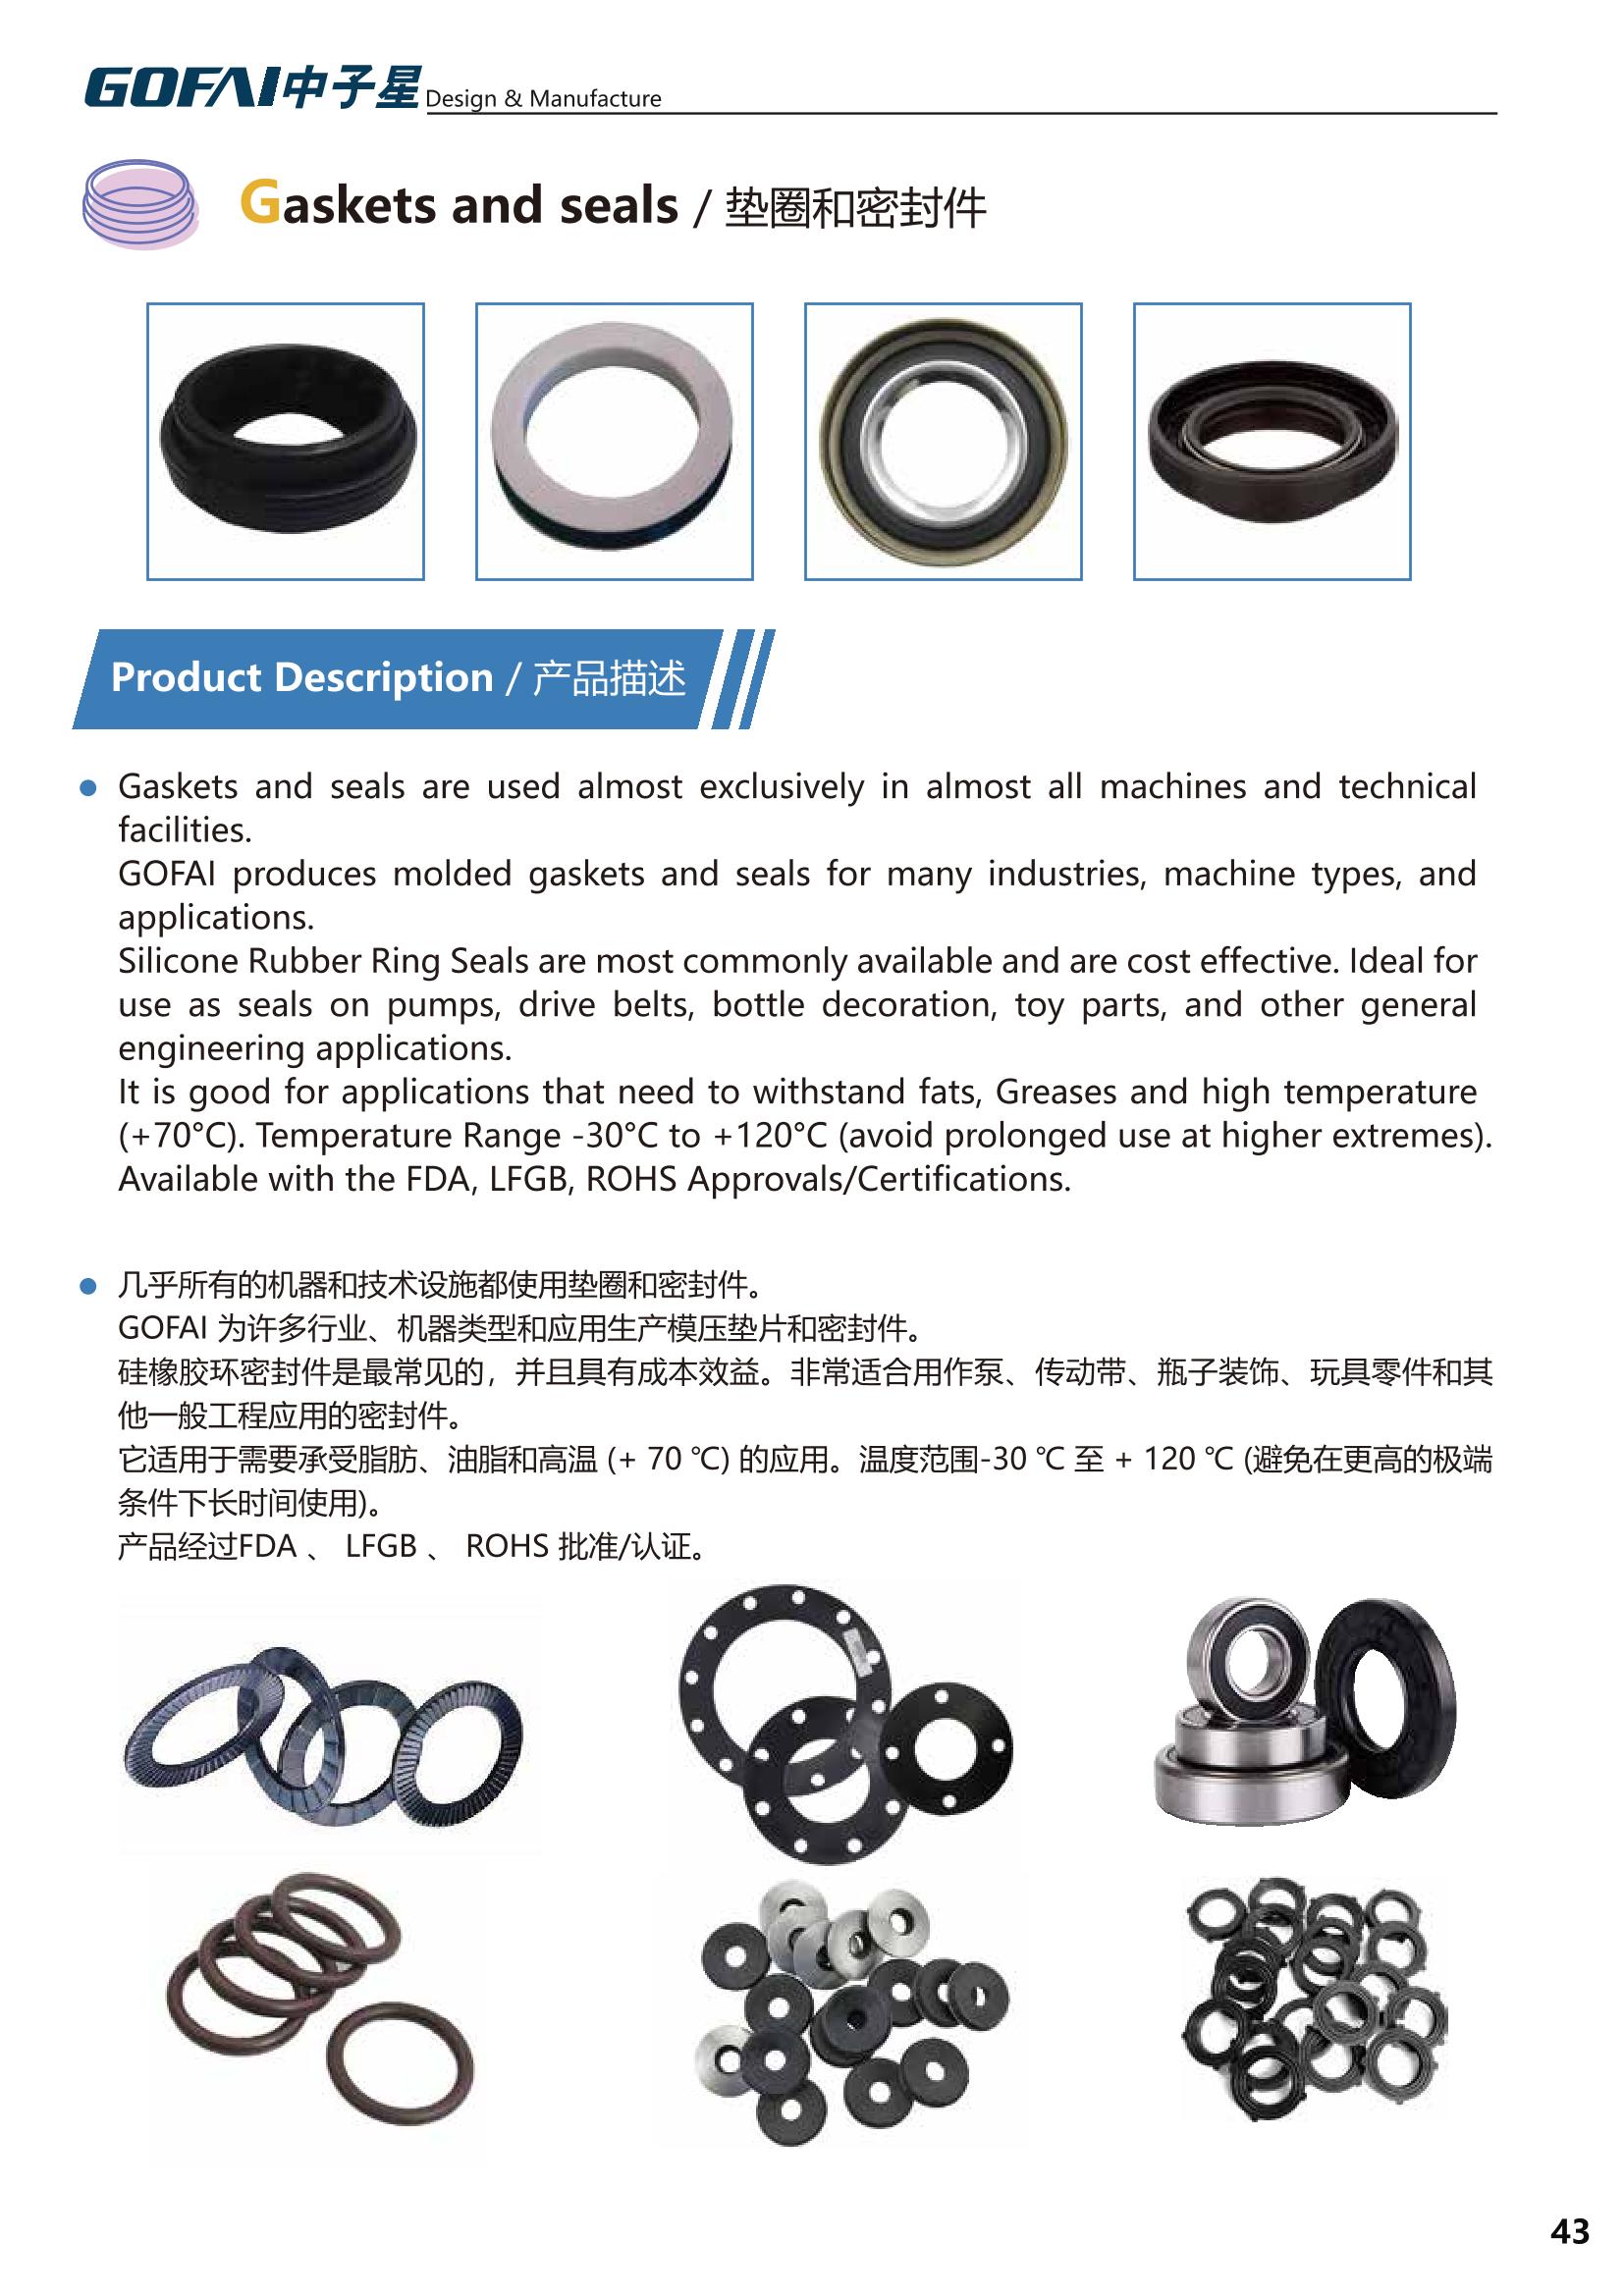 GOFAI product catalog_43.jpg